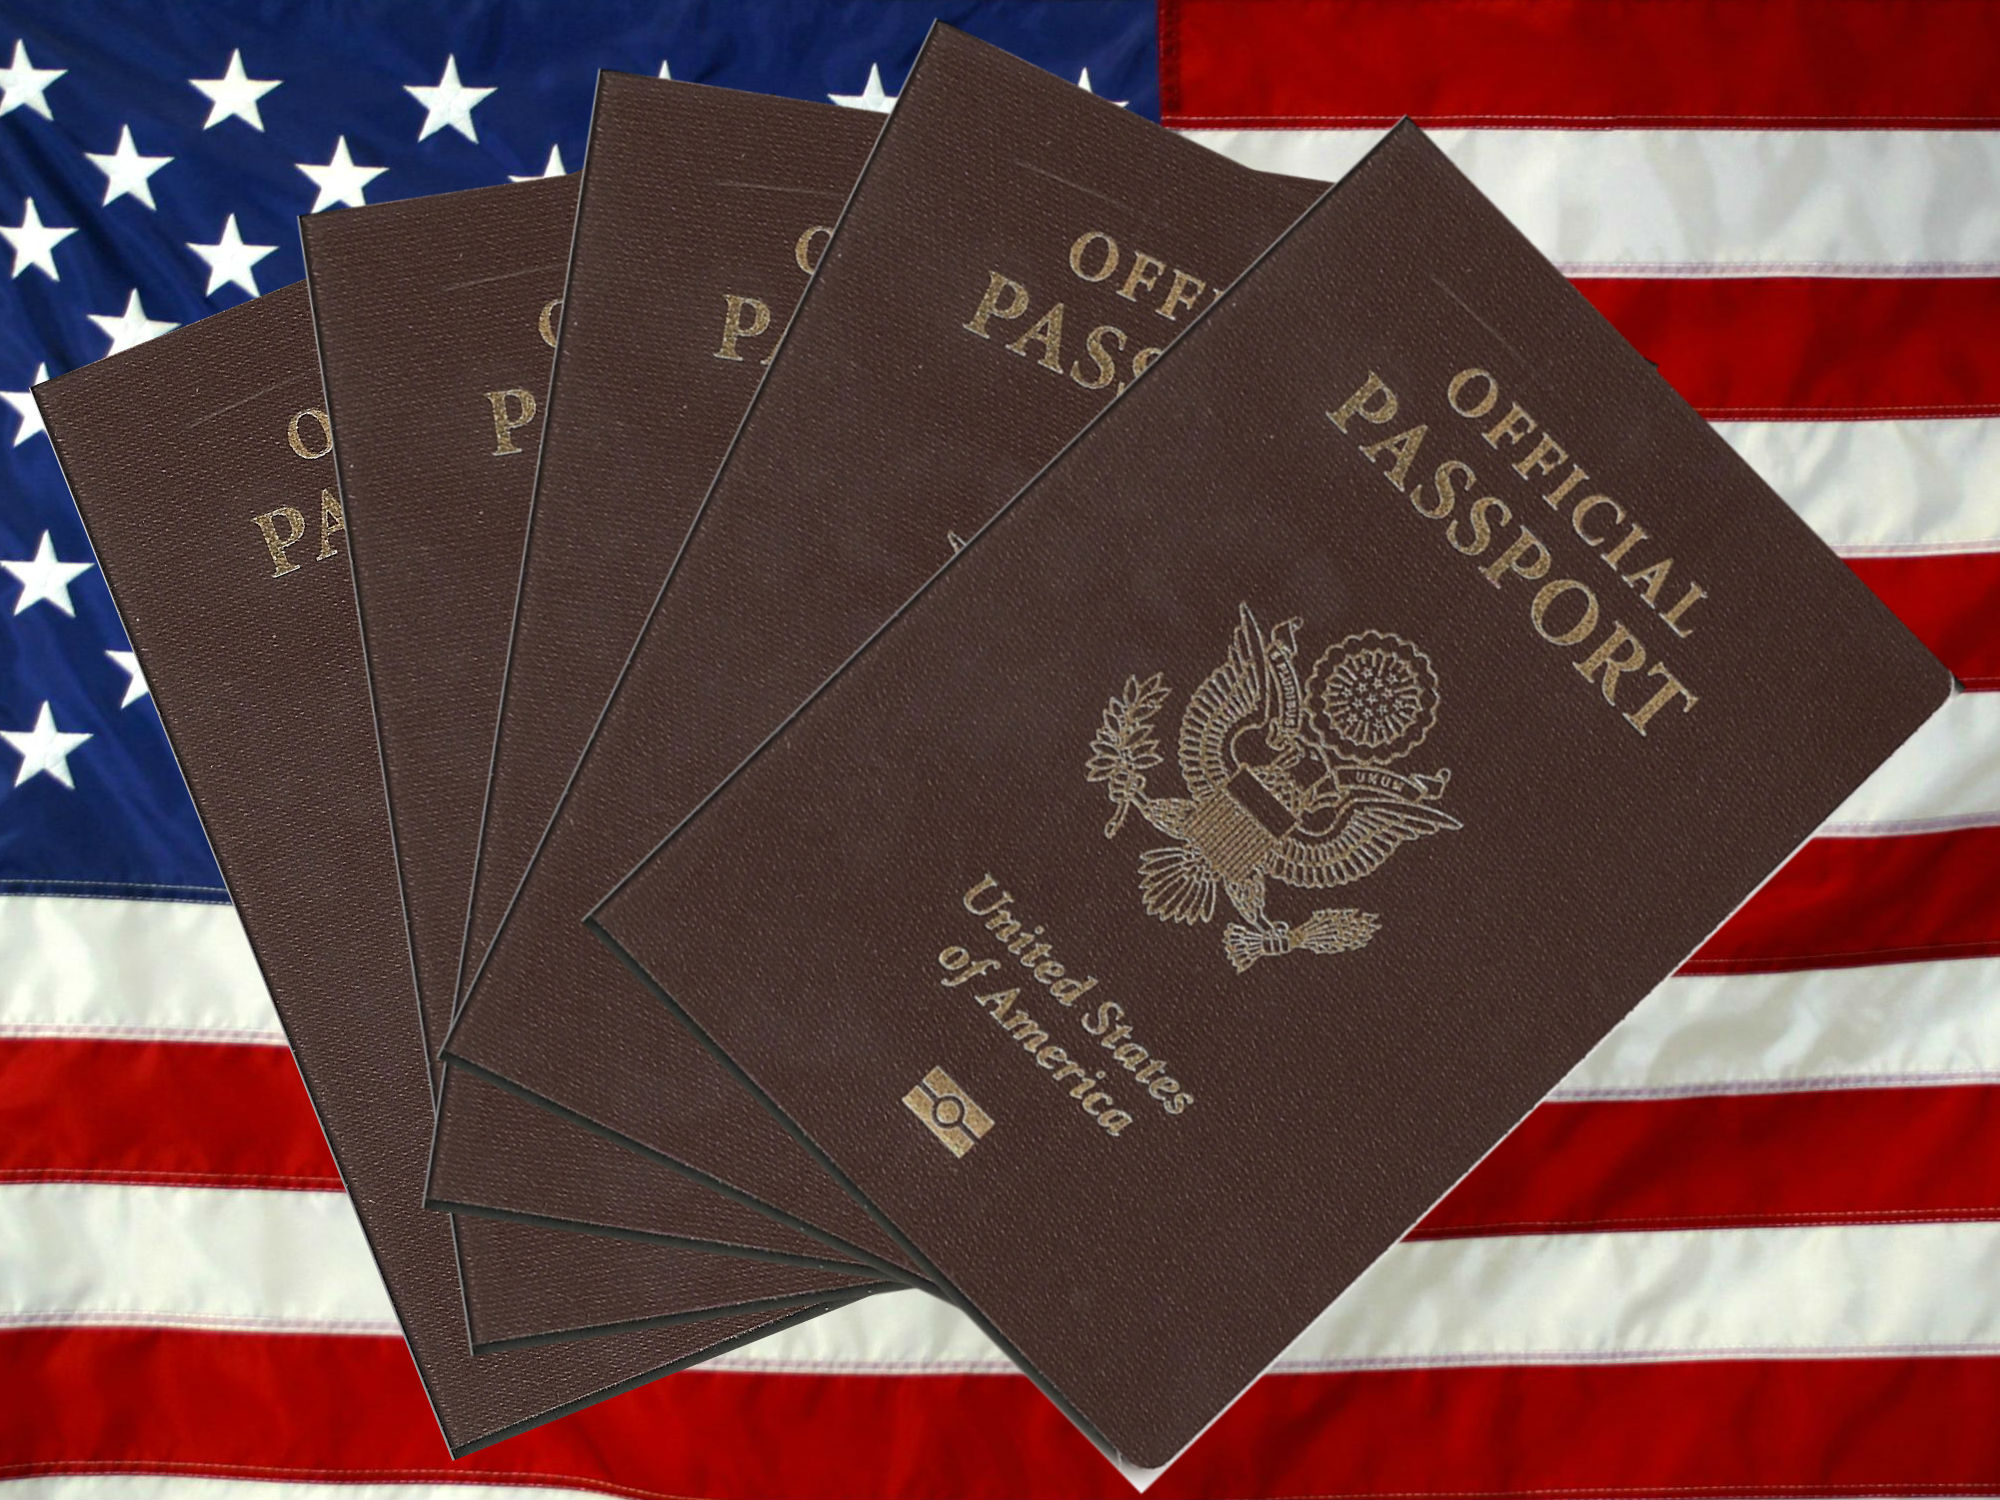 ordinary passport vs official passport